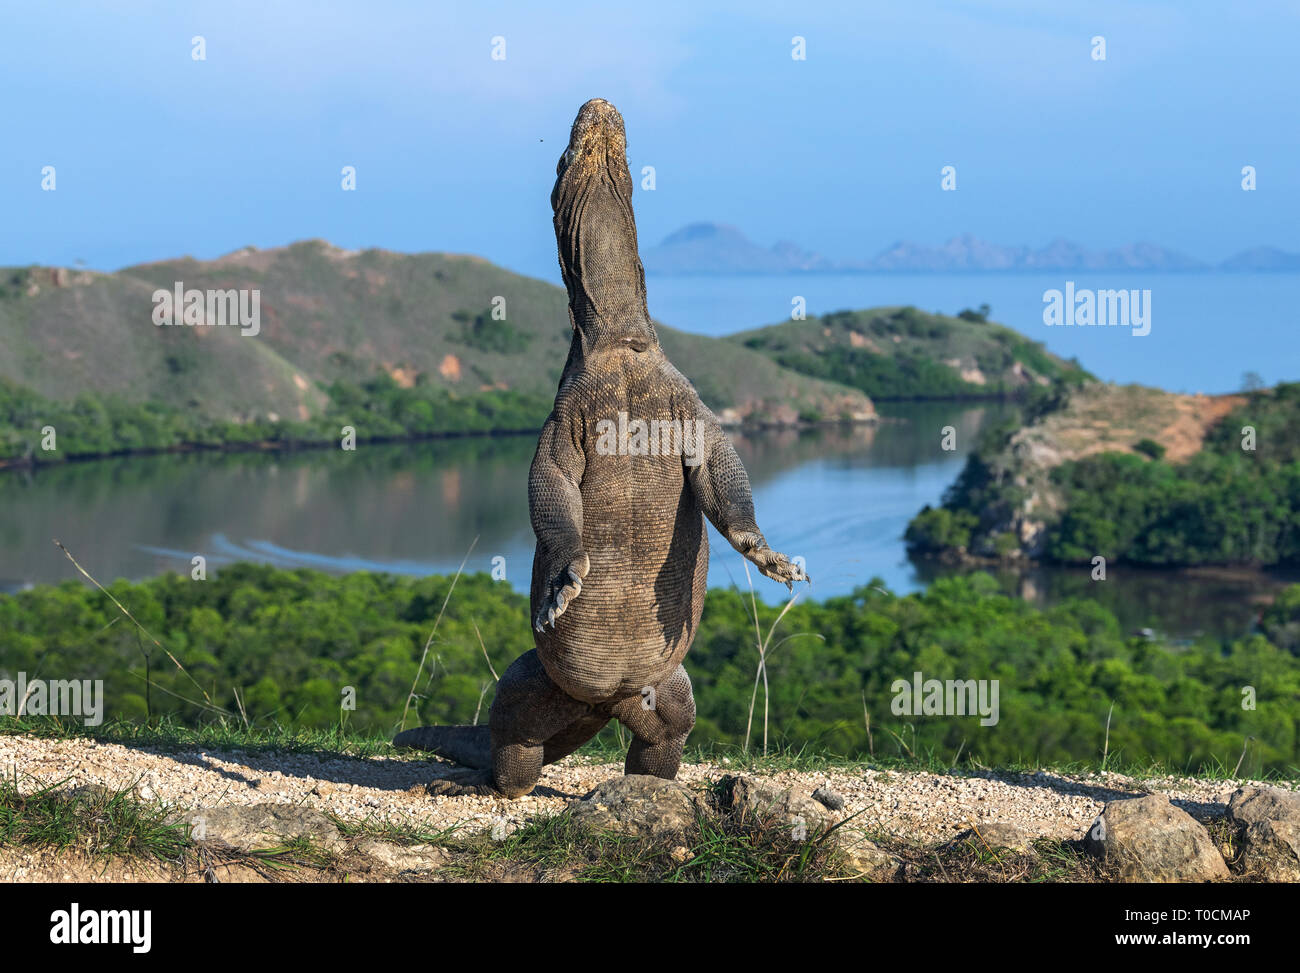 The Komodo dragon  stands on its hind legs. Scientific name: Varanus komodoensis. Biggest living lizard in the world. Rinca island. Indonesia. Stock Photo